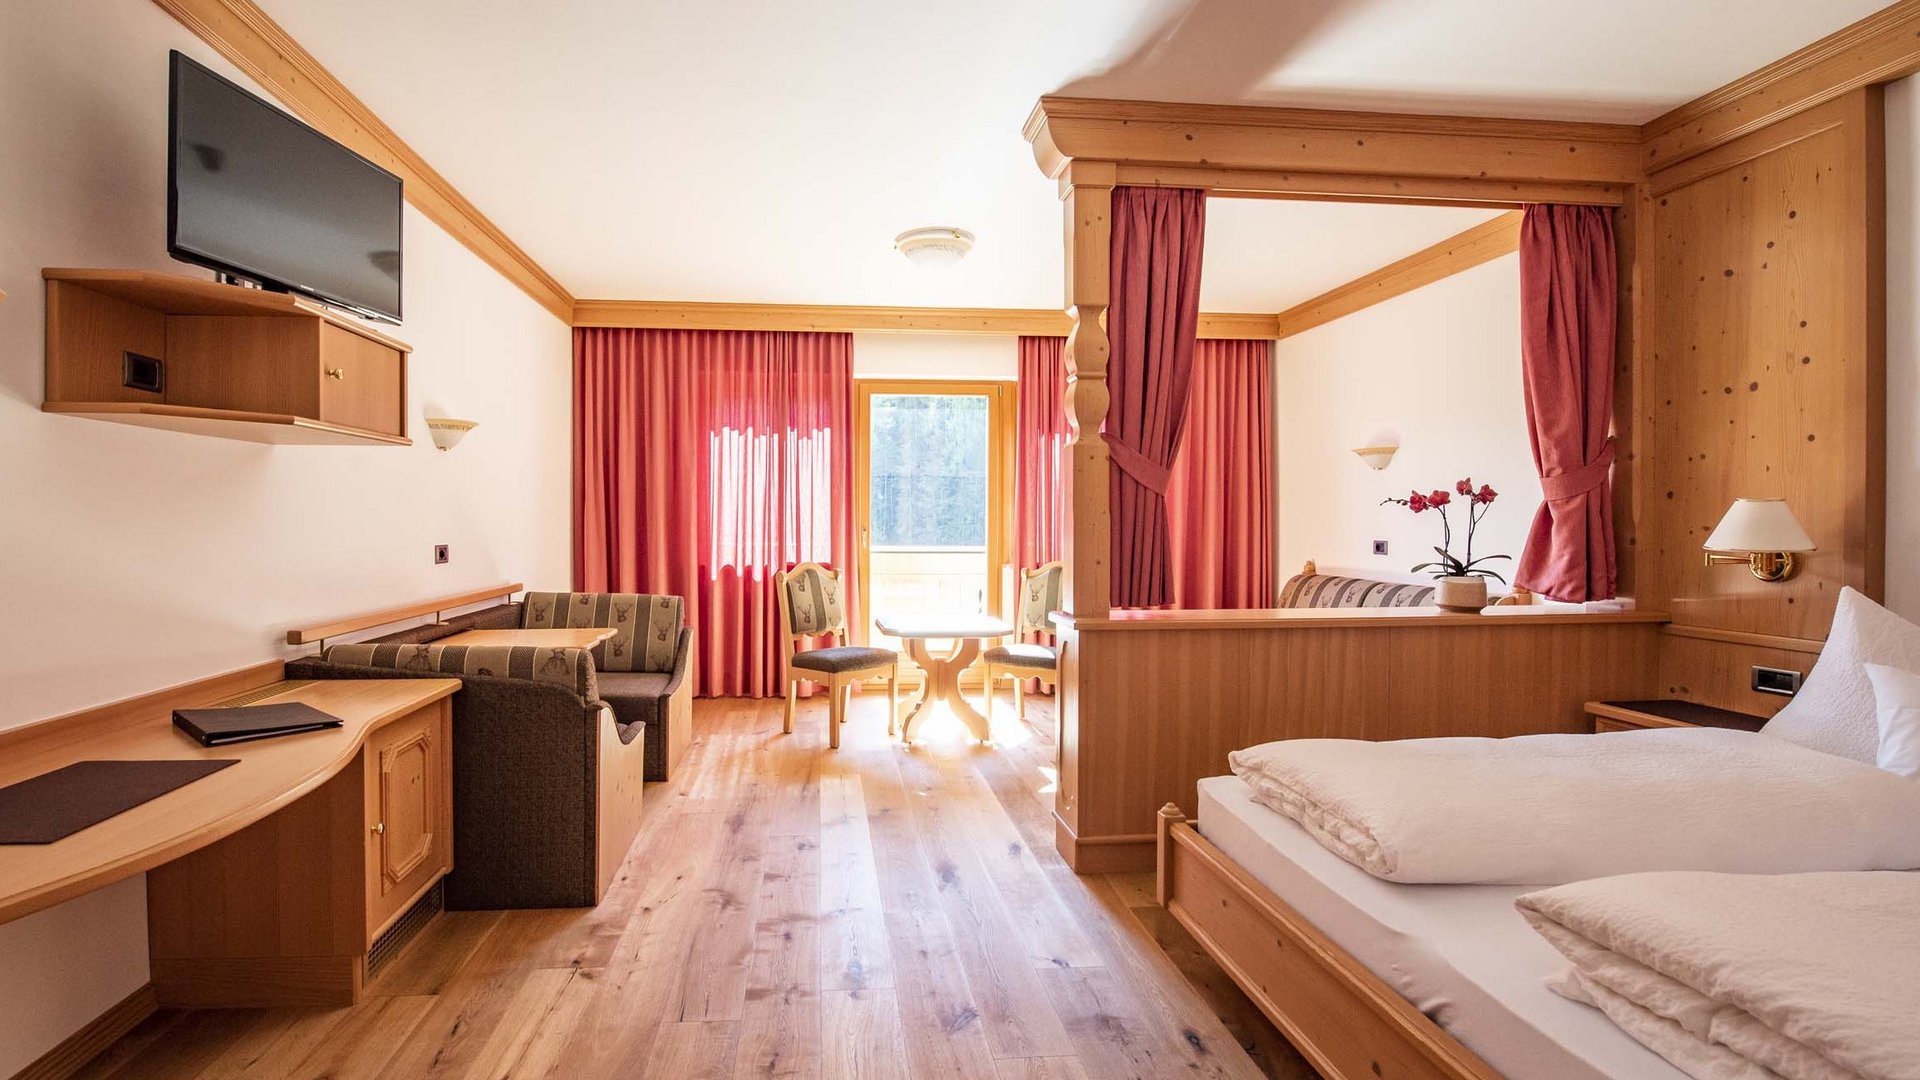 4-star hotel in Plan de Corones/Kronplatz: your perfect holiday home